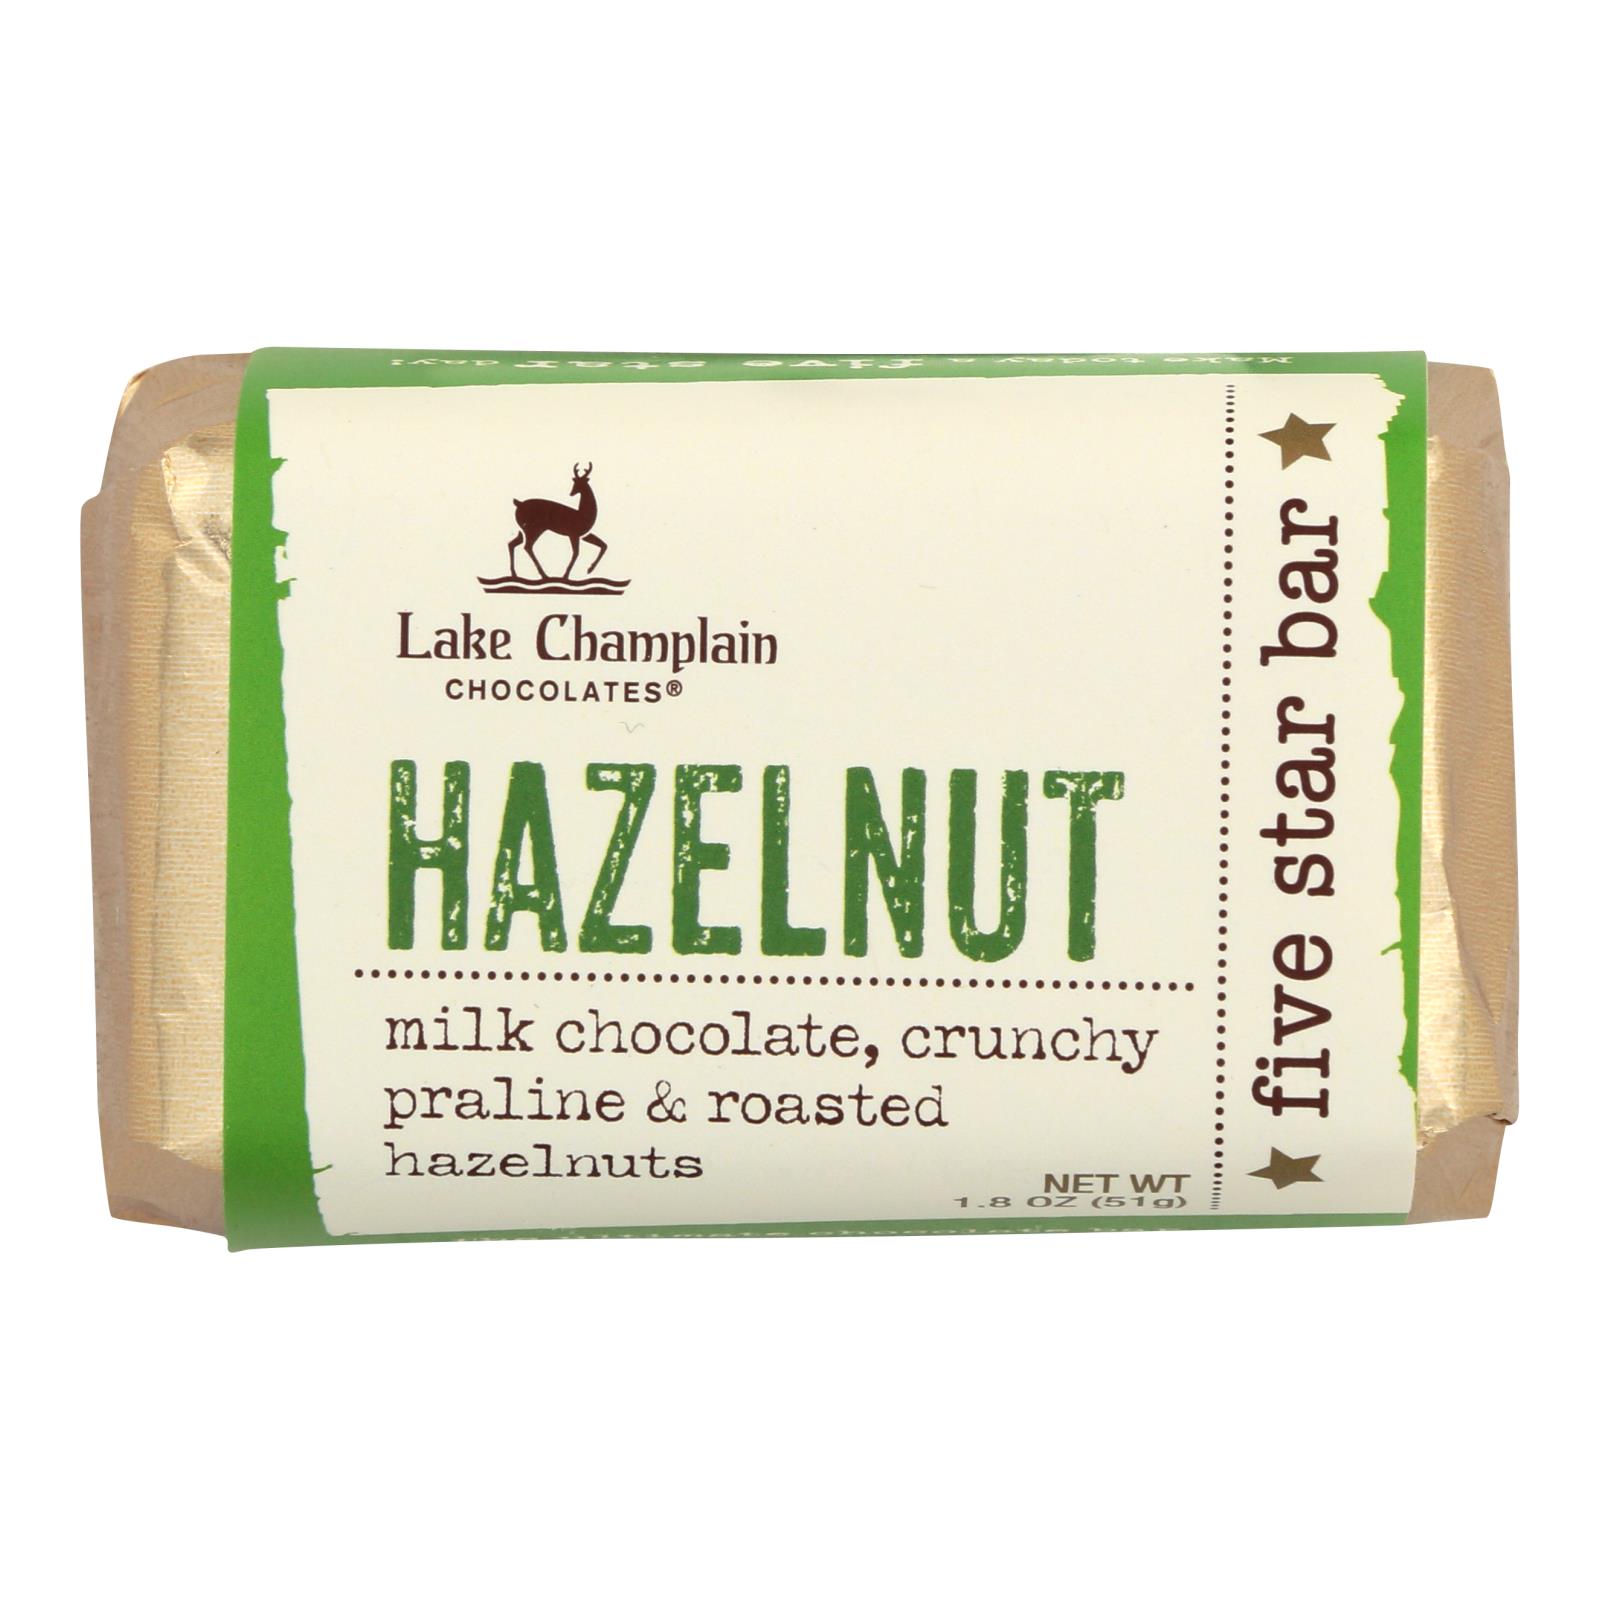 Lake Champlain Chocolates Hazelnut Five Star Bars - 16개 묶음상품 - 1.8 OZ